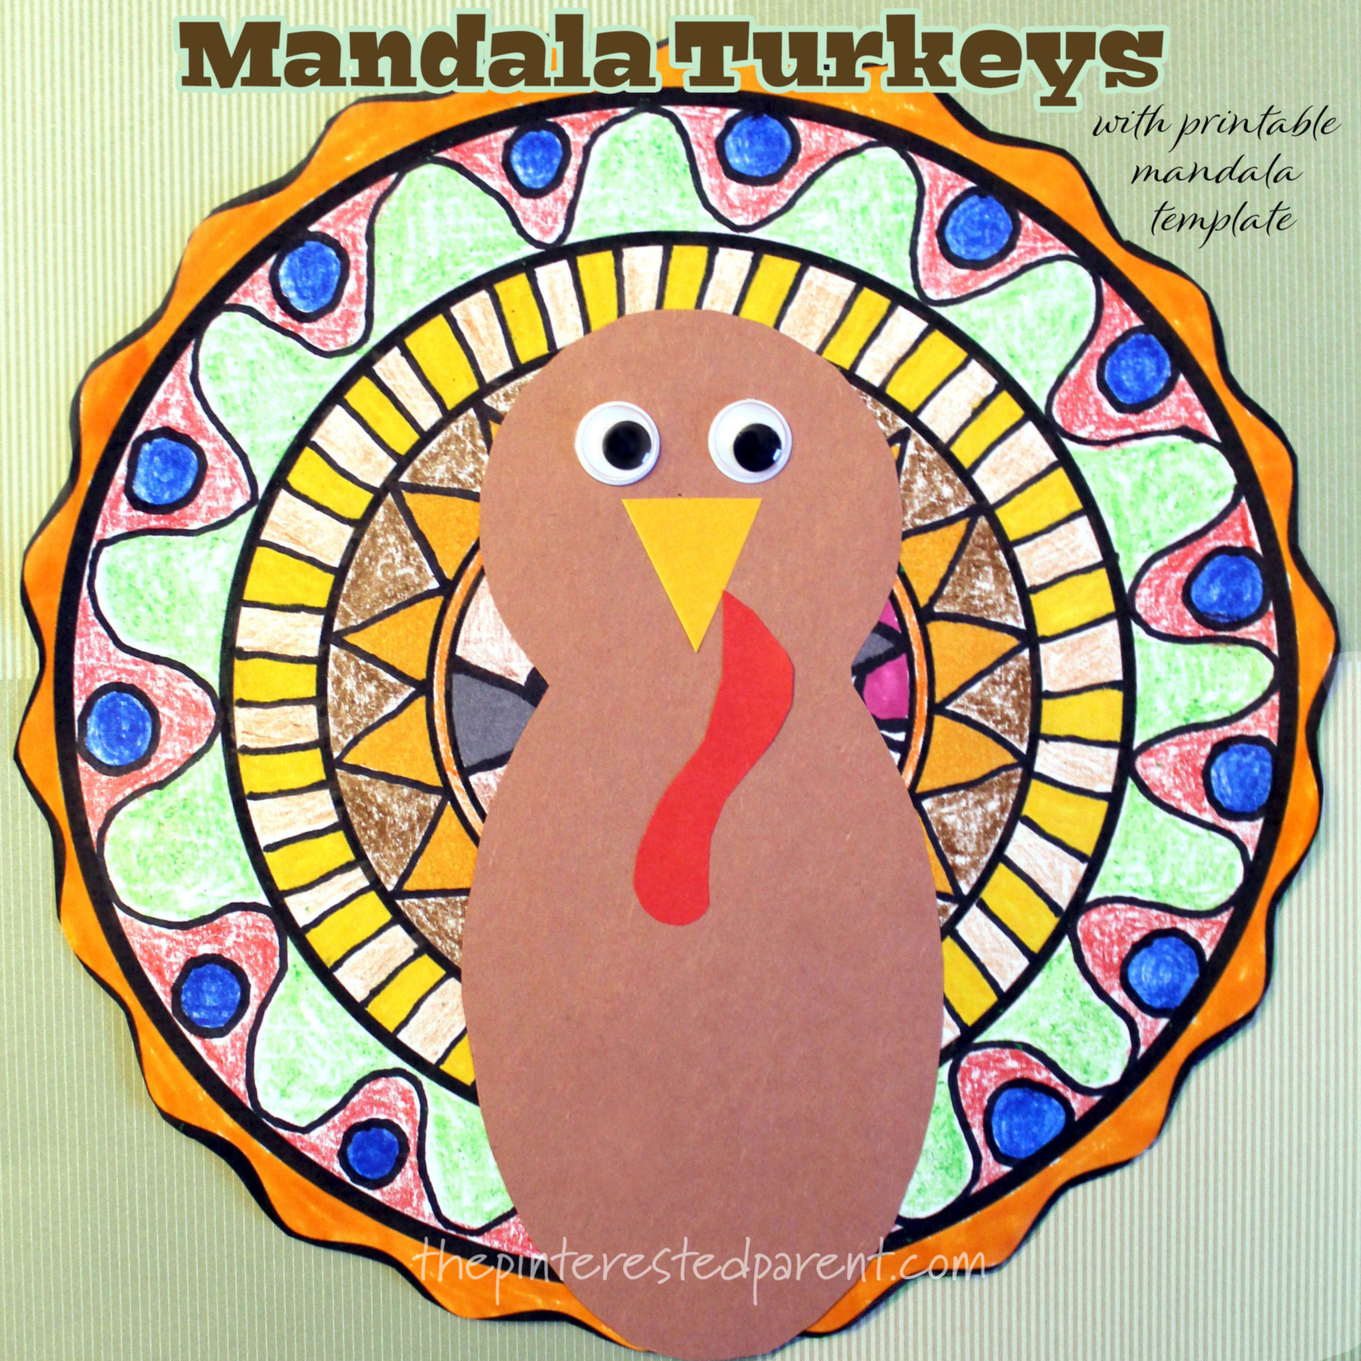 Mandala Turkeys with printable draw-in mandala template. #kids arts & crafts #Thanksgiving #turkey #mandala